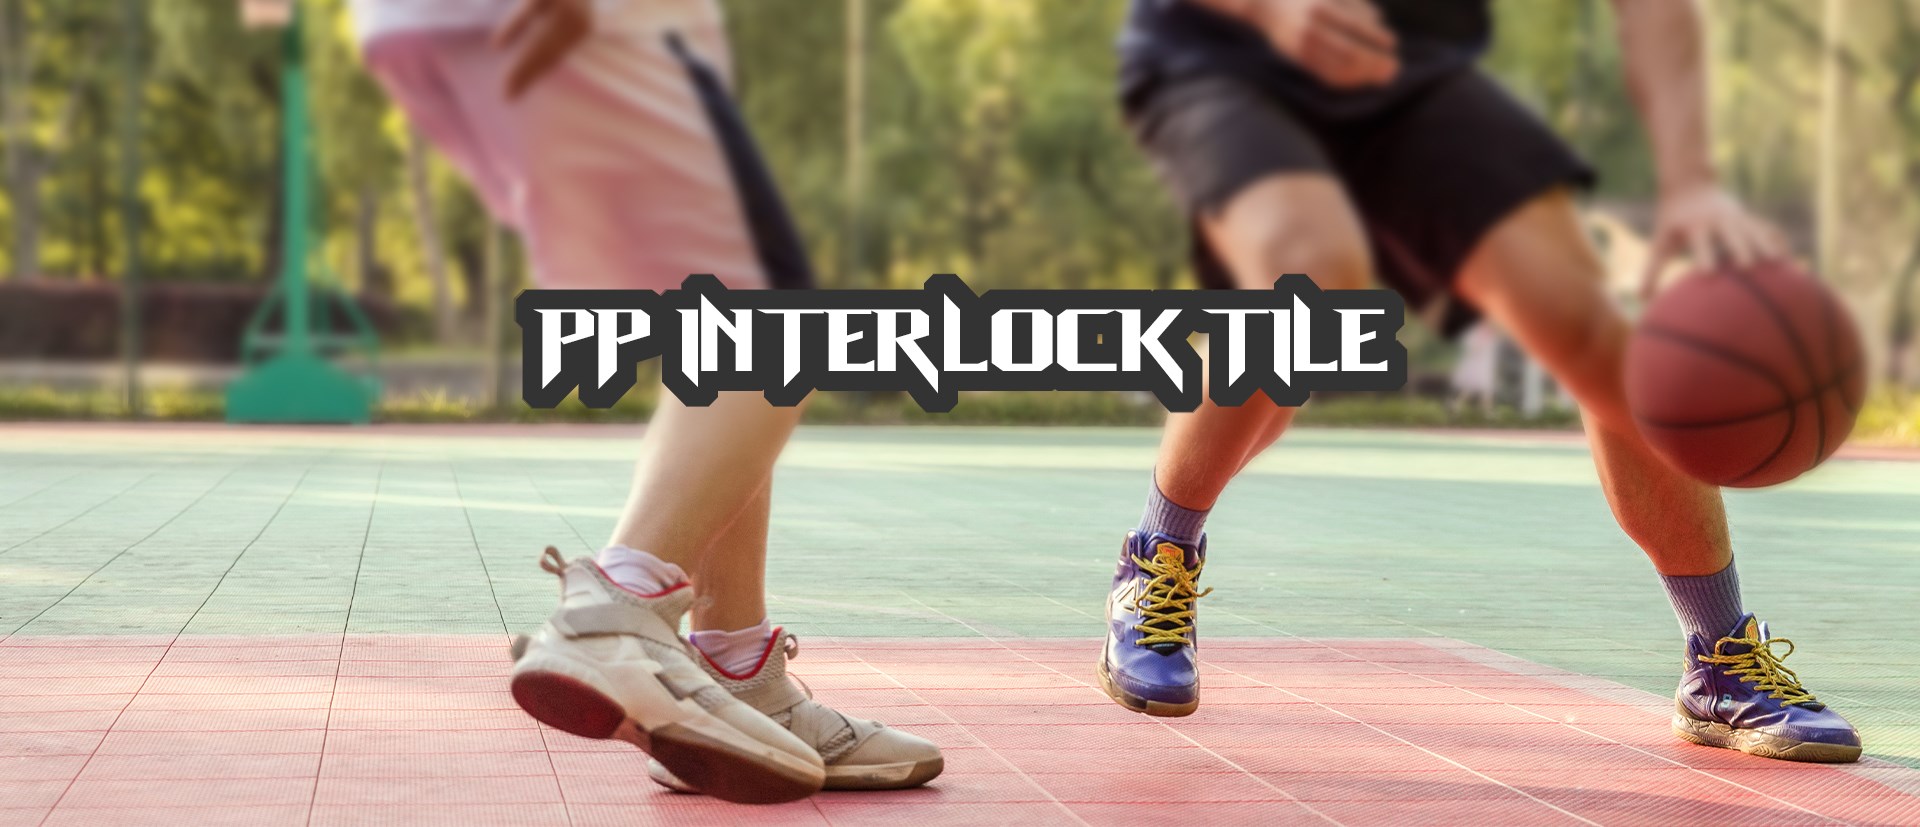 PP interlock tiles